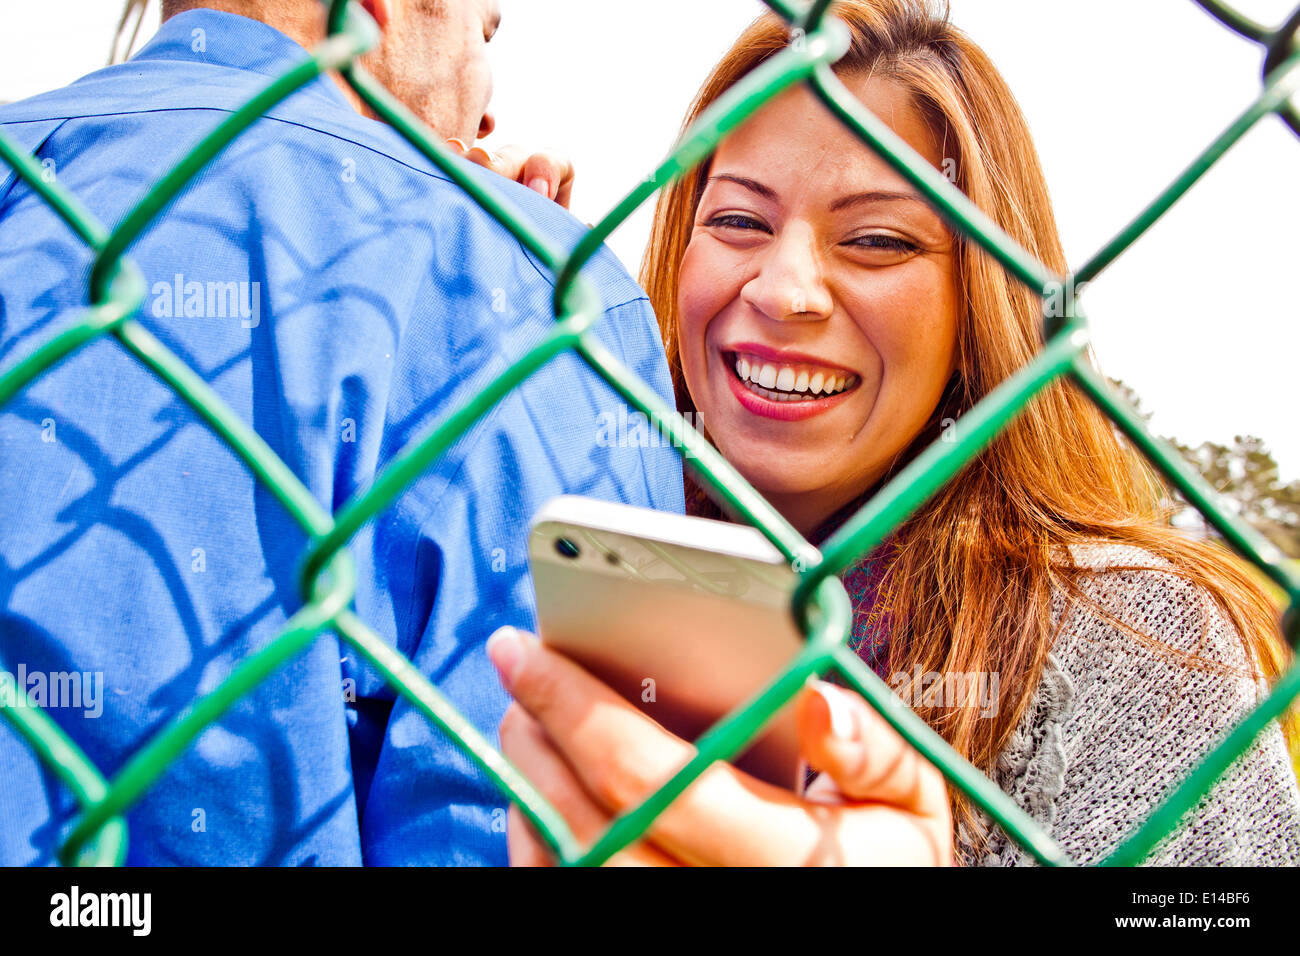 Hispanic woman with boyfriend using cell phone Stock Photo